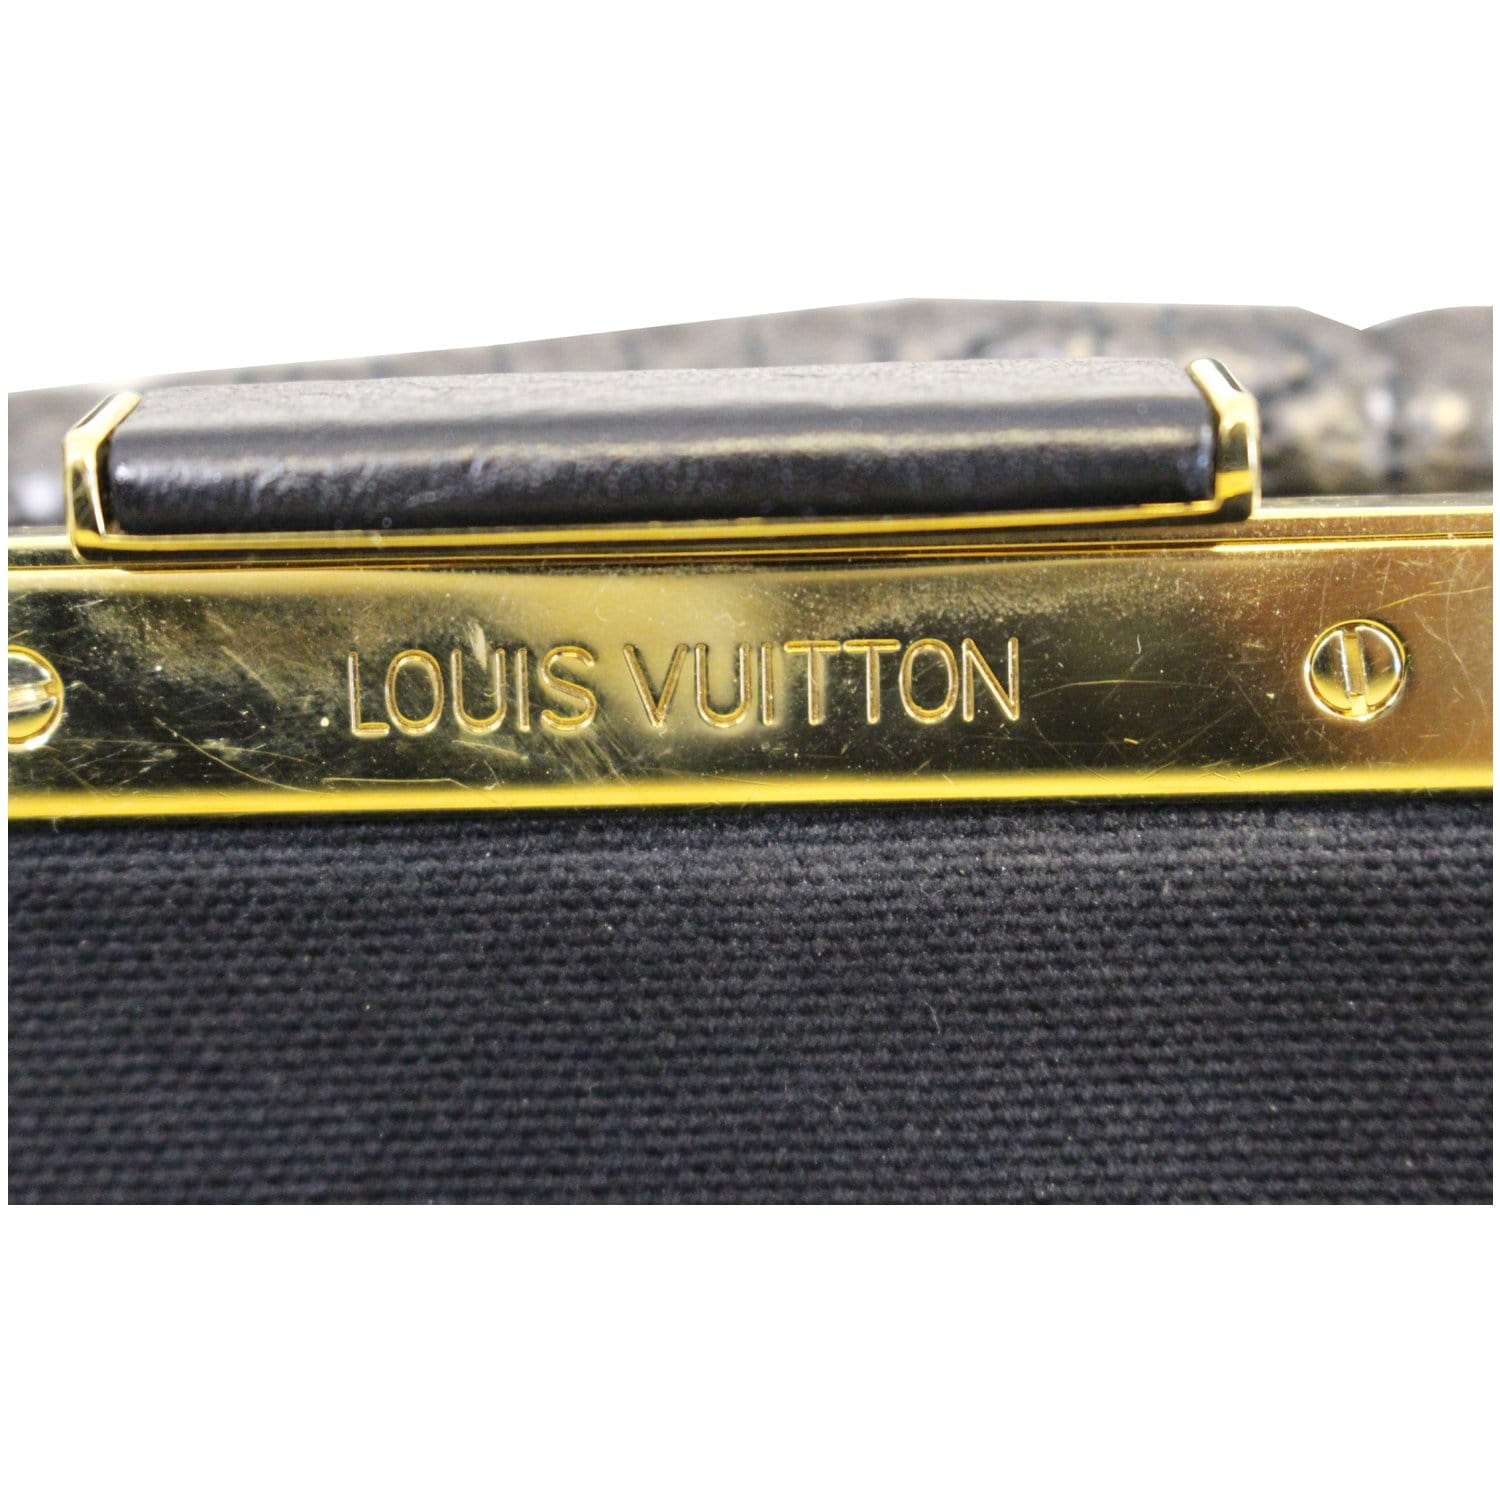 Louis Vuitton Quilt Monogram Motard Biker Moto Studs Bag Purse Limited  Edition